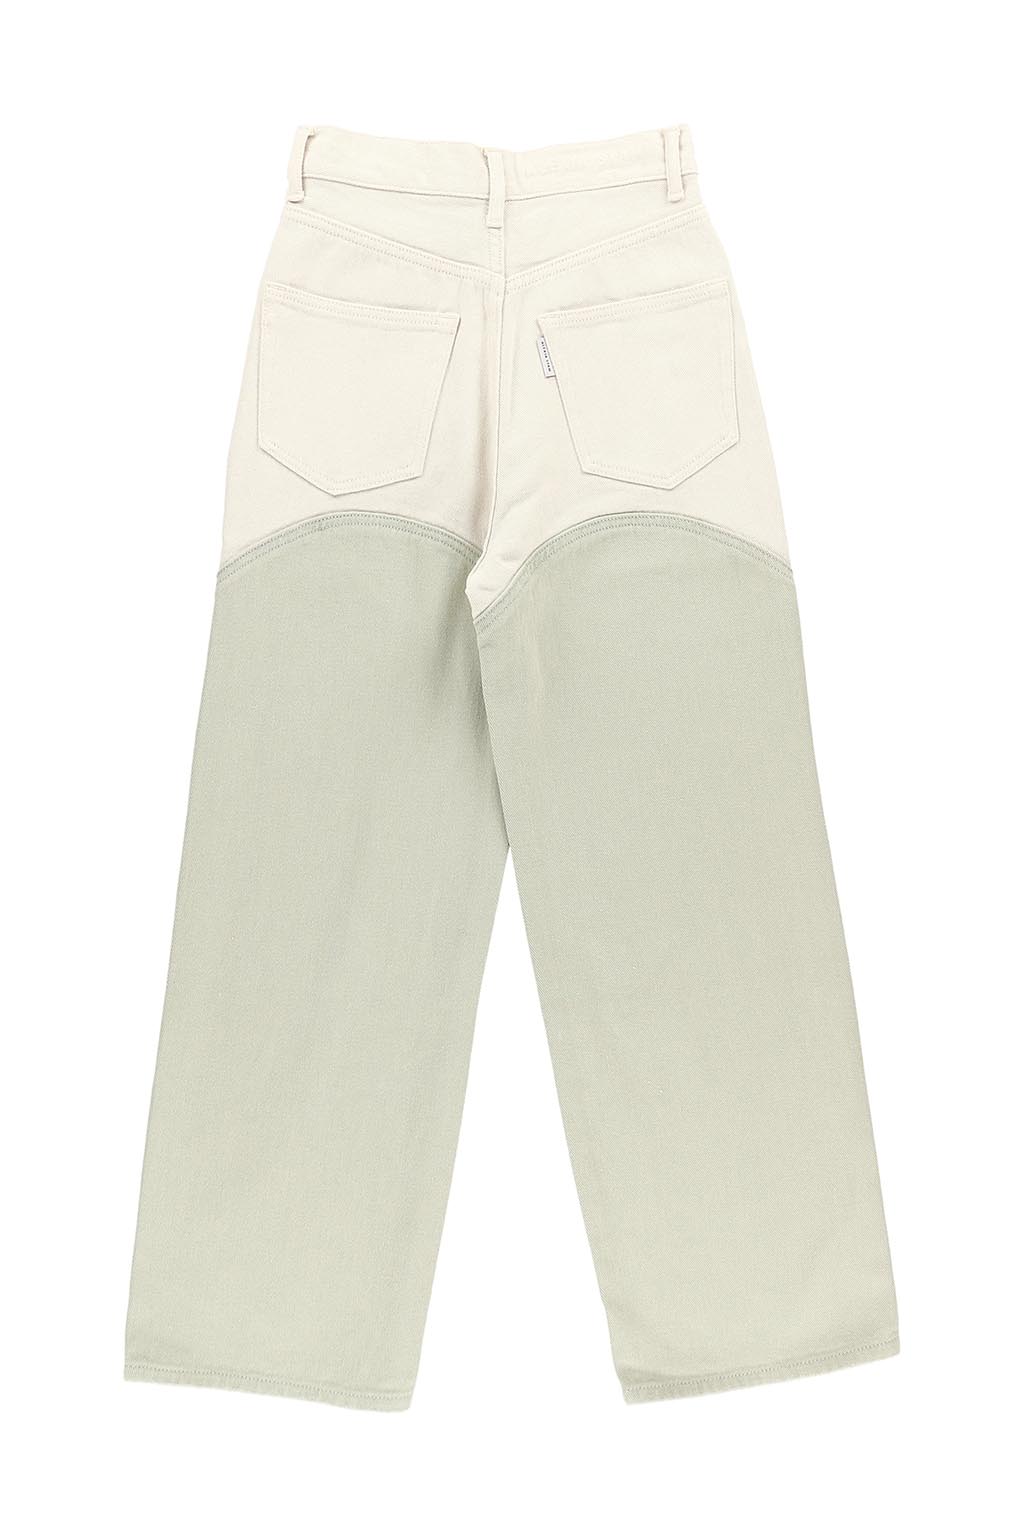 contrast-color-wide-pants-ivory-07